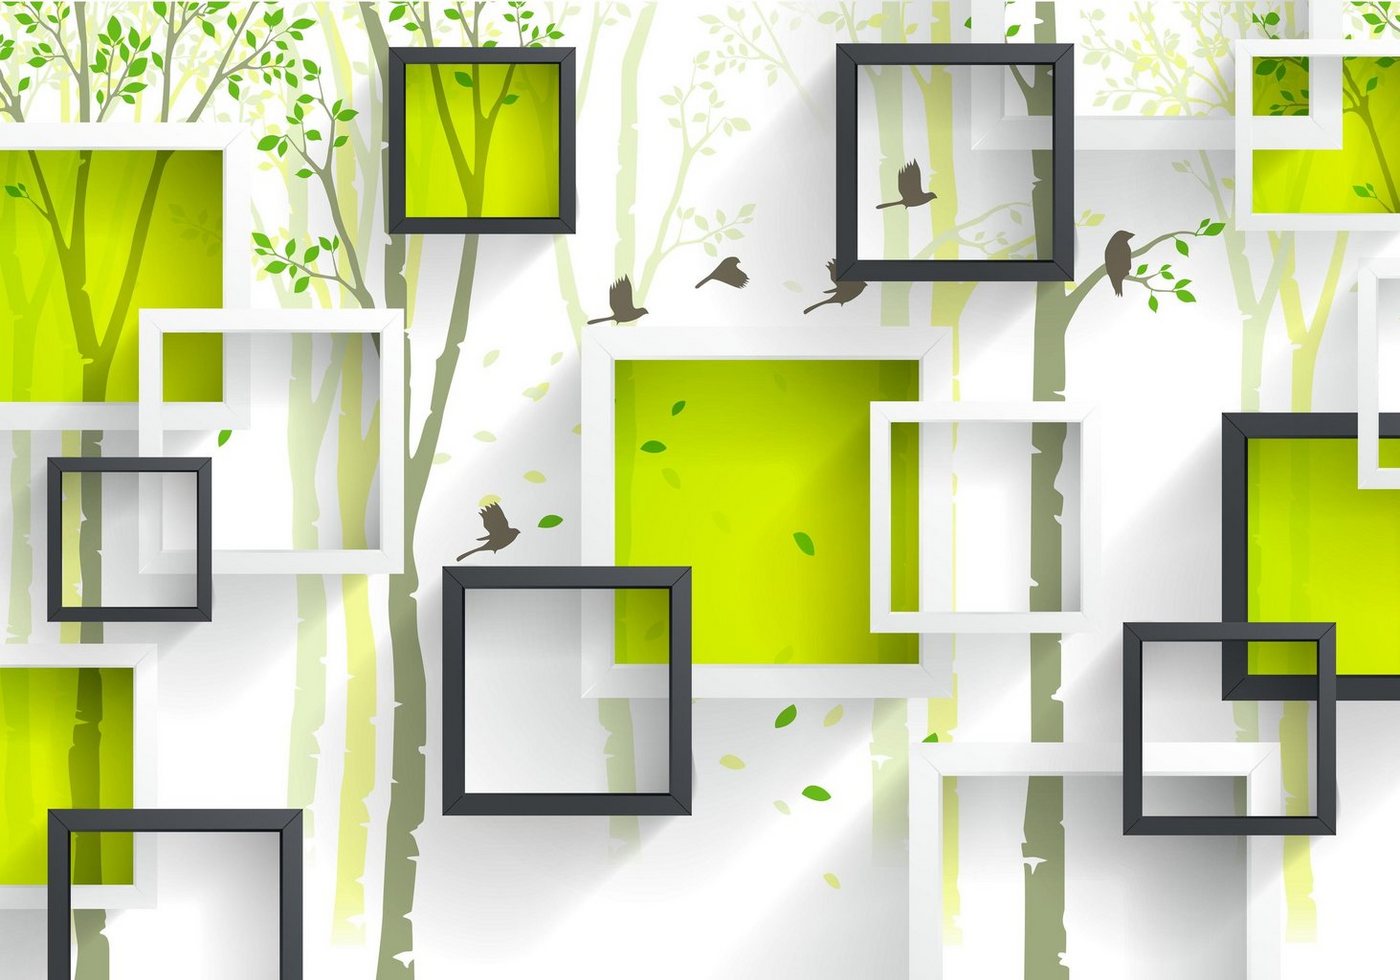 wandmotiv24 Fototapete Abstrakt Grün Fenster grün Wald Vögel, glatt, Wandtapete, Motivtapete, matt, Vliestapete, selbstklebend von wandmotiv24